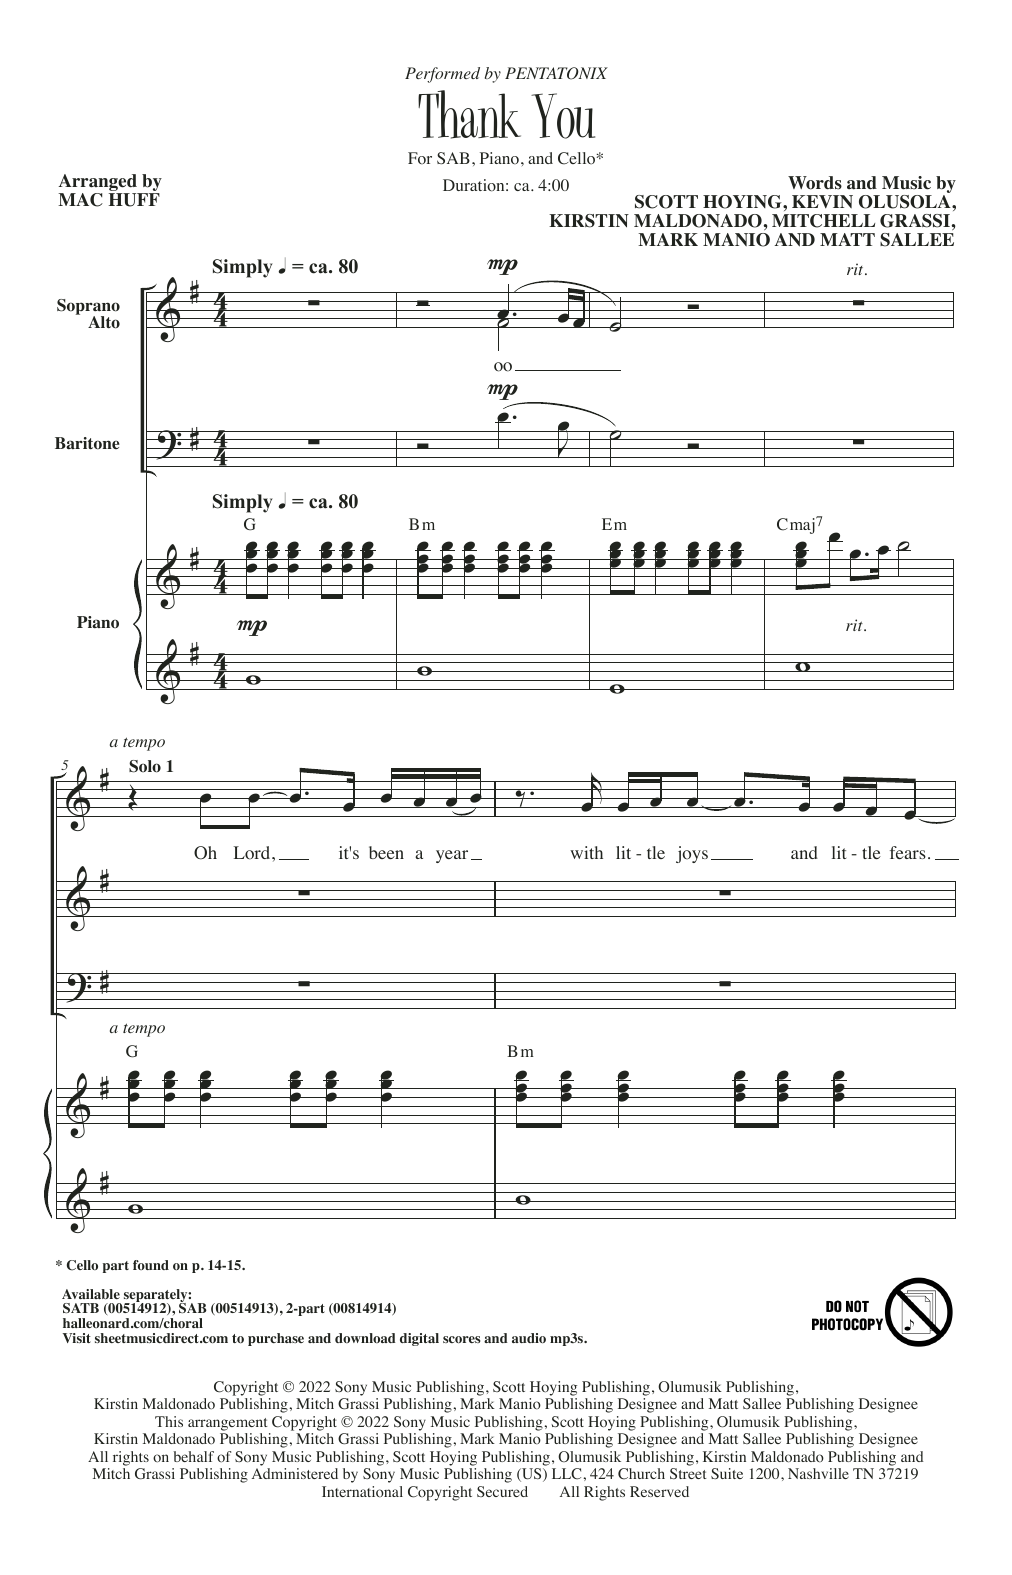 Pentatonix Thank You (arr. Mac Huff) Sheet Music Notes & Chords for SATB Choir - Download or Print PDF